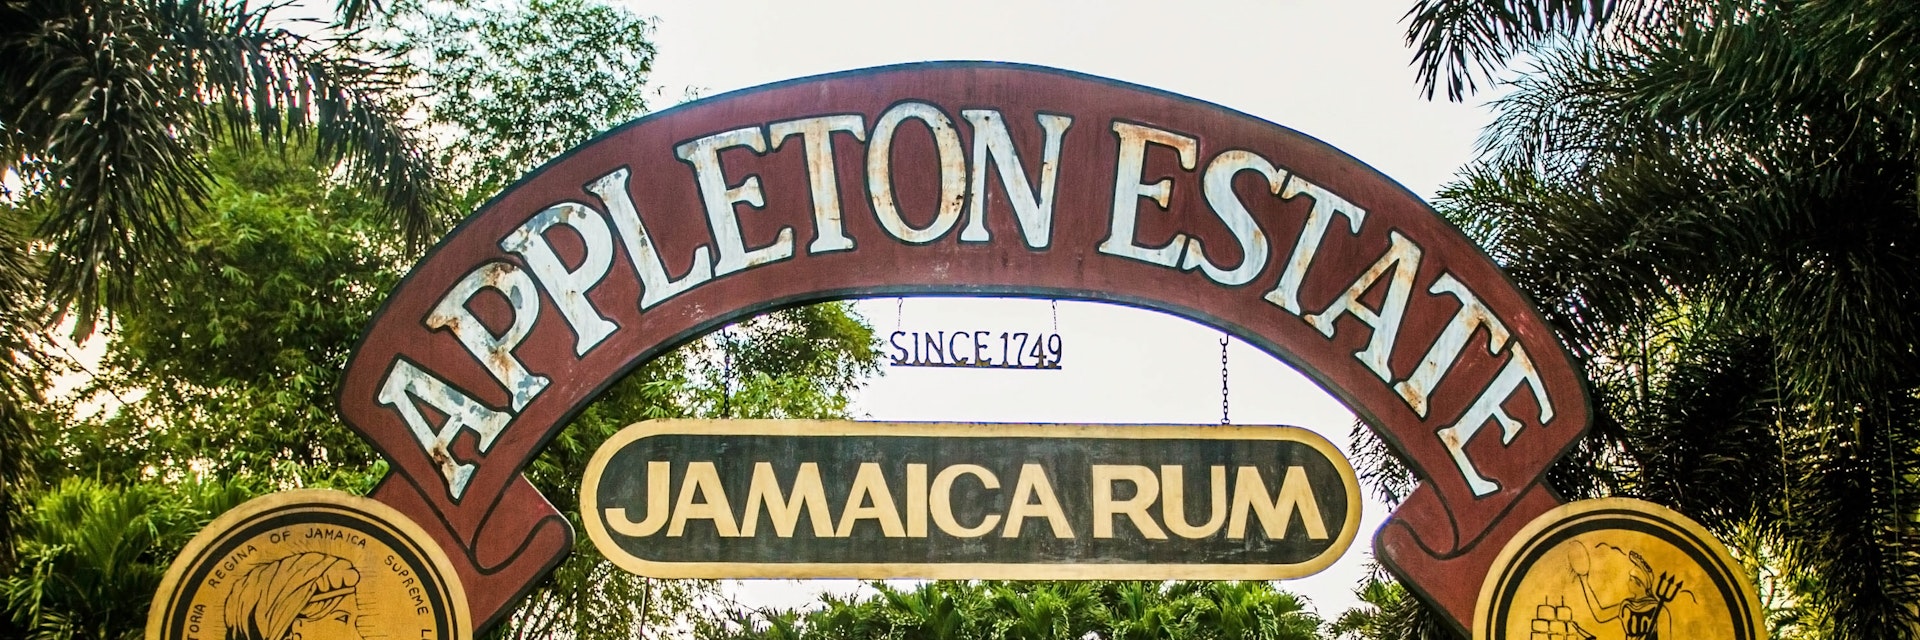 Appleton, Jamaica - 11/26/2013: Jamaica Appleton famous aged rum production factory; Shutterstock ID 1624598548; your: Evan Godt; gl: 65050; netsuite: Online Editorial; full: Demand content/Vanguard POIs